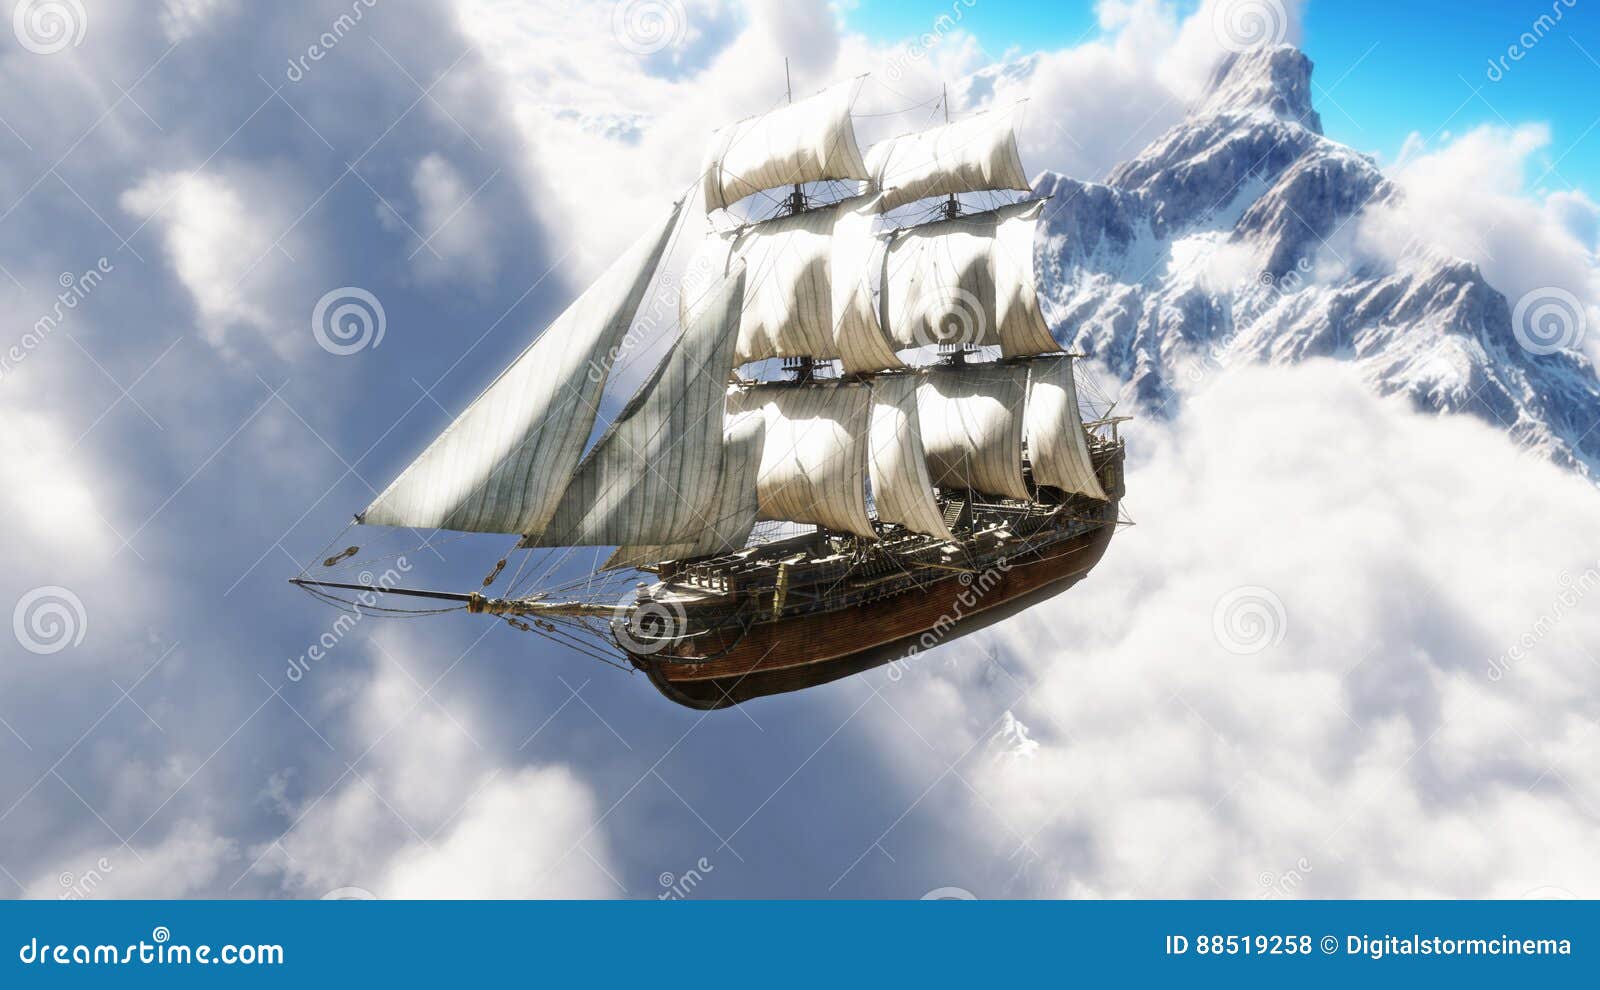 Fantasy Concept Of A Pirate Ship Sailing Through The ...